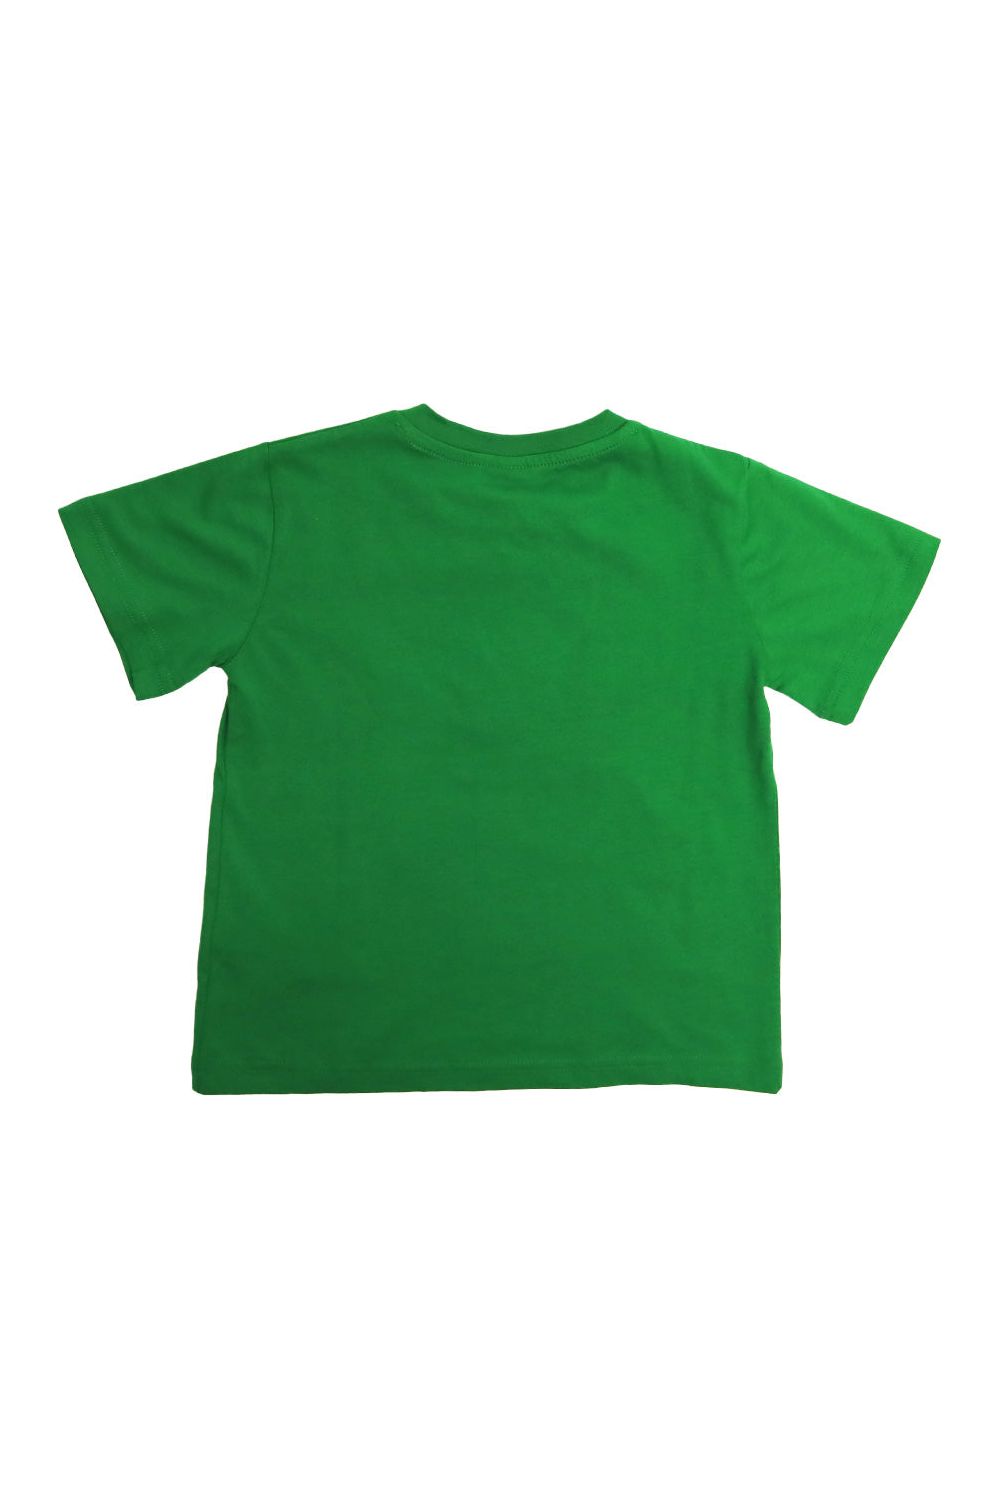 Tiki Crew On Tour Youth Short Sleeve T-Shirt Bottle Green